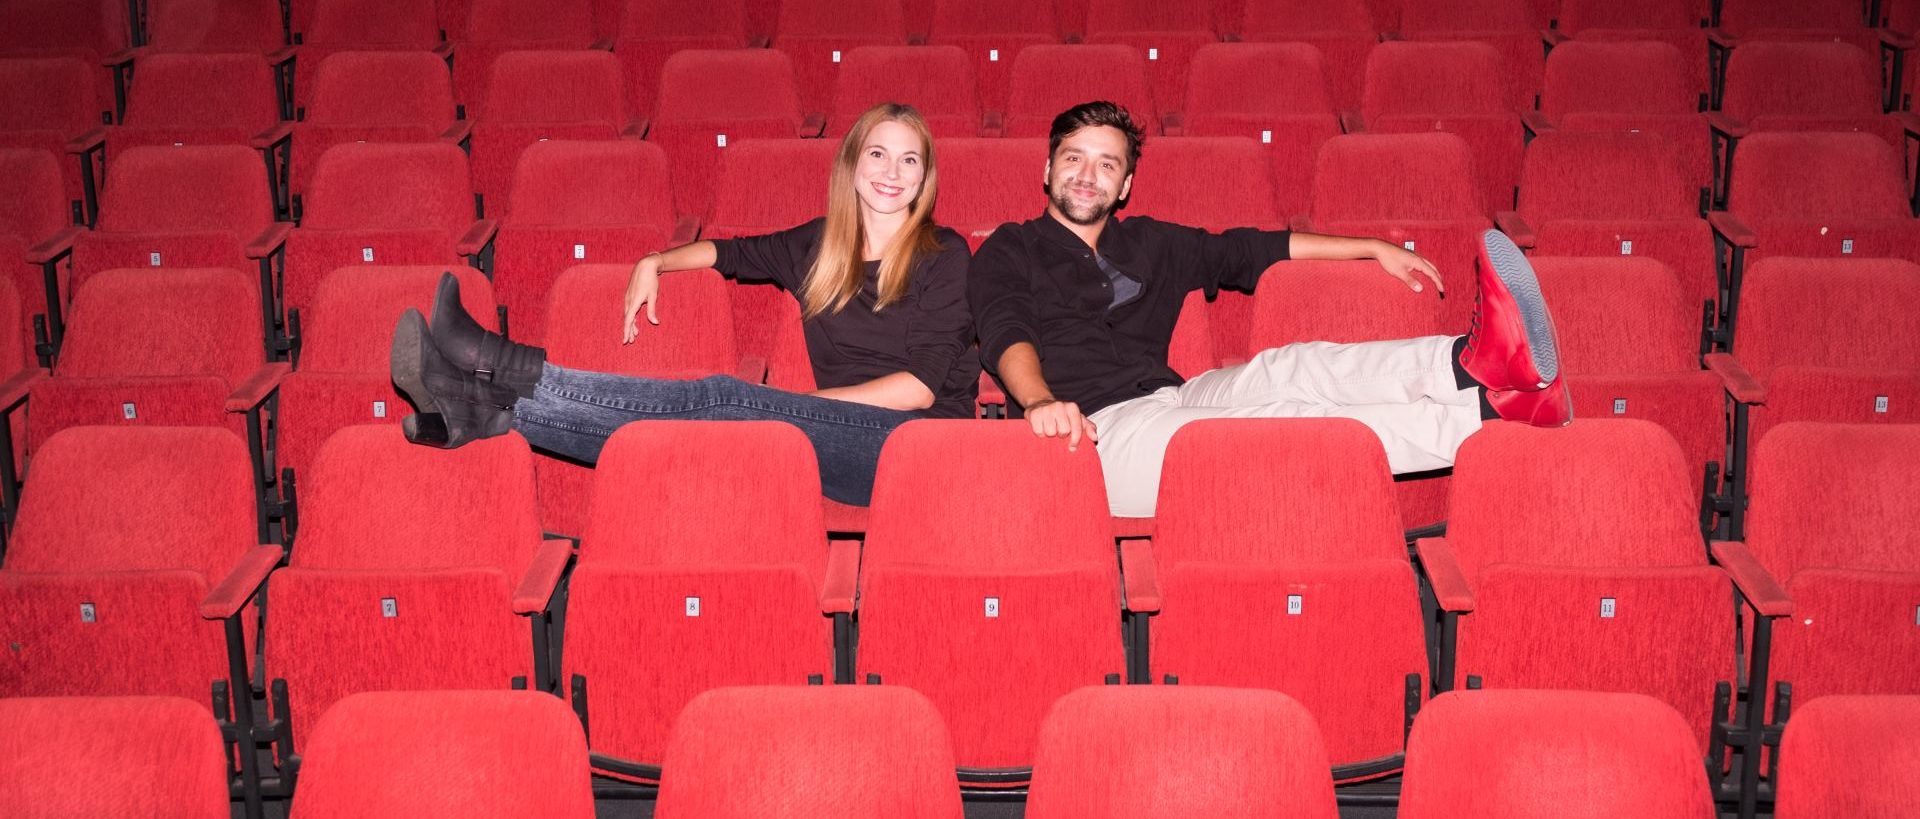 FOTO: Nova sezona u Kazalištu Knap donosi brojne premijere i suradnje